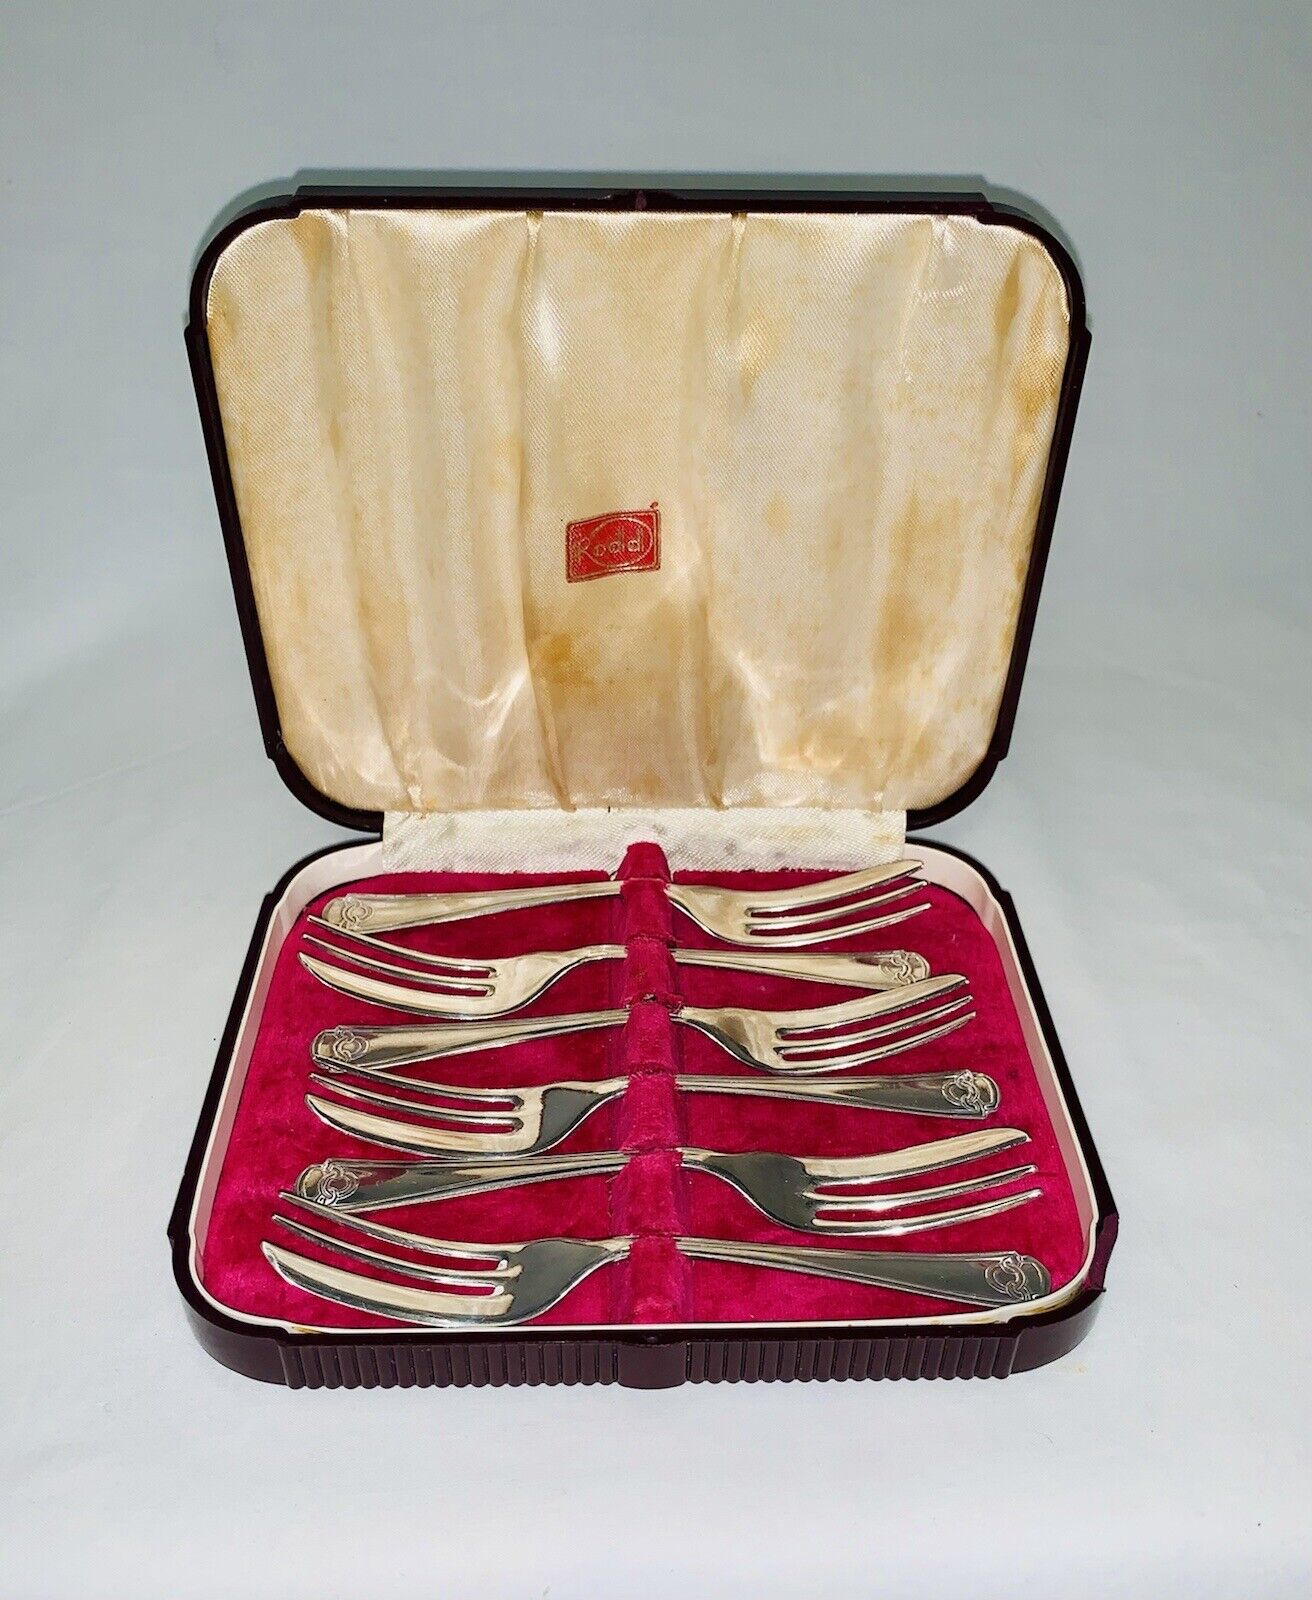 Rodd - set of 6, EPNS teaspoons in original bakelite box. High tea, silver plate